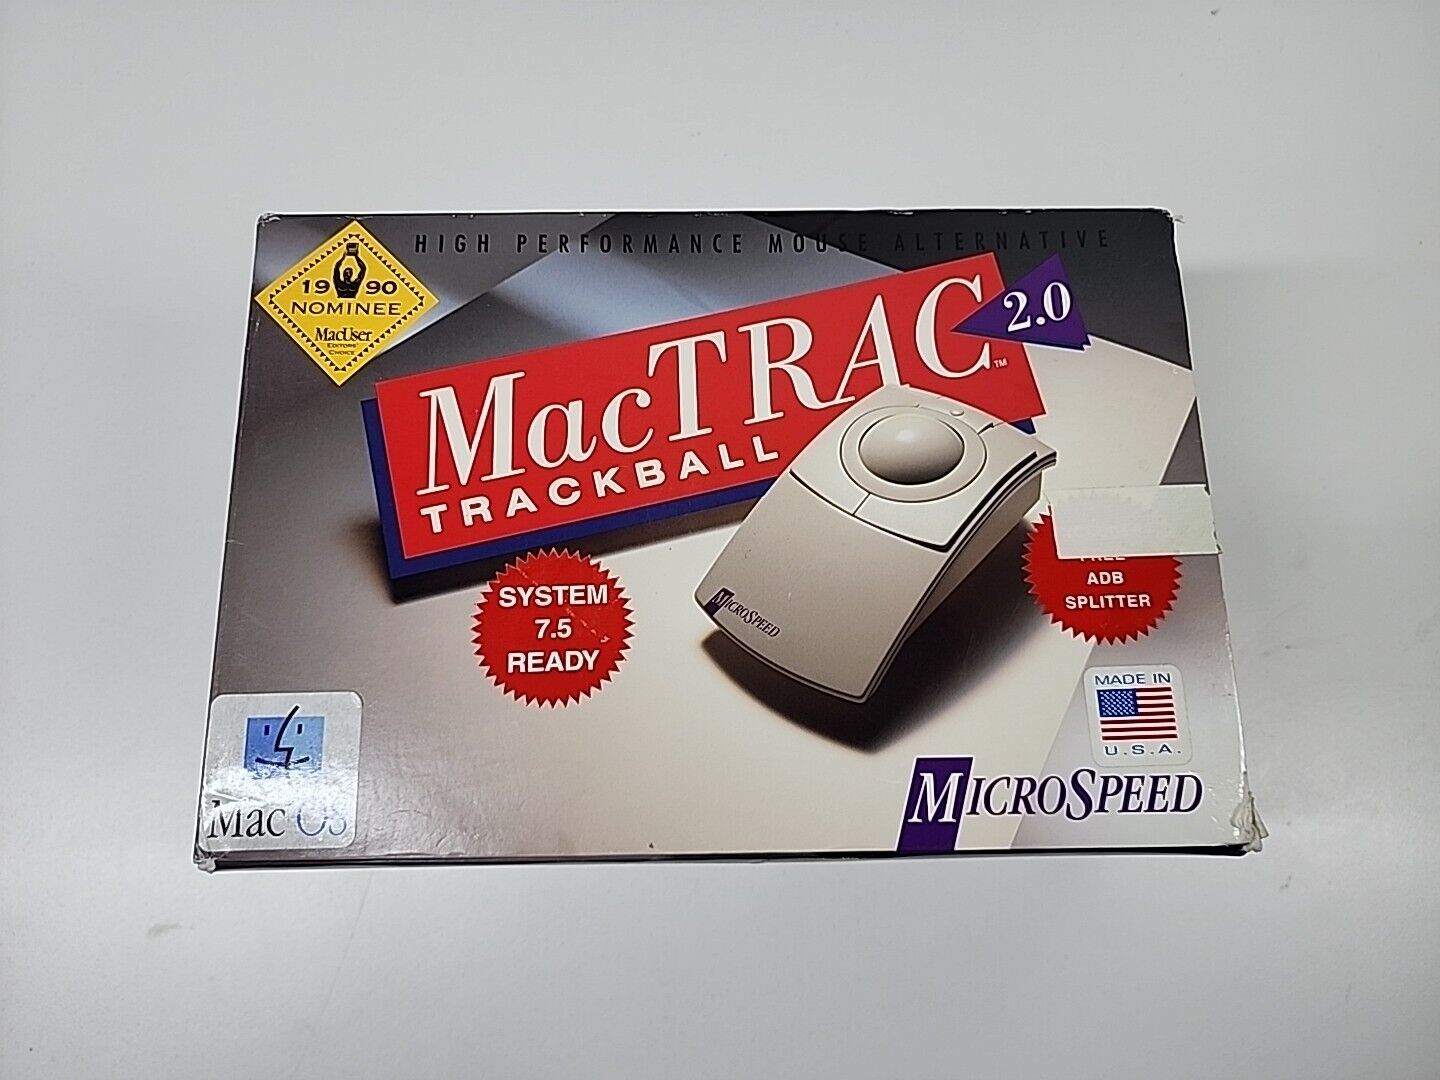 Vintage MacTRAC 2.0 ADB Trackball for Apple Macintosh by MicroSpeed